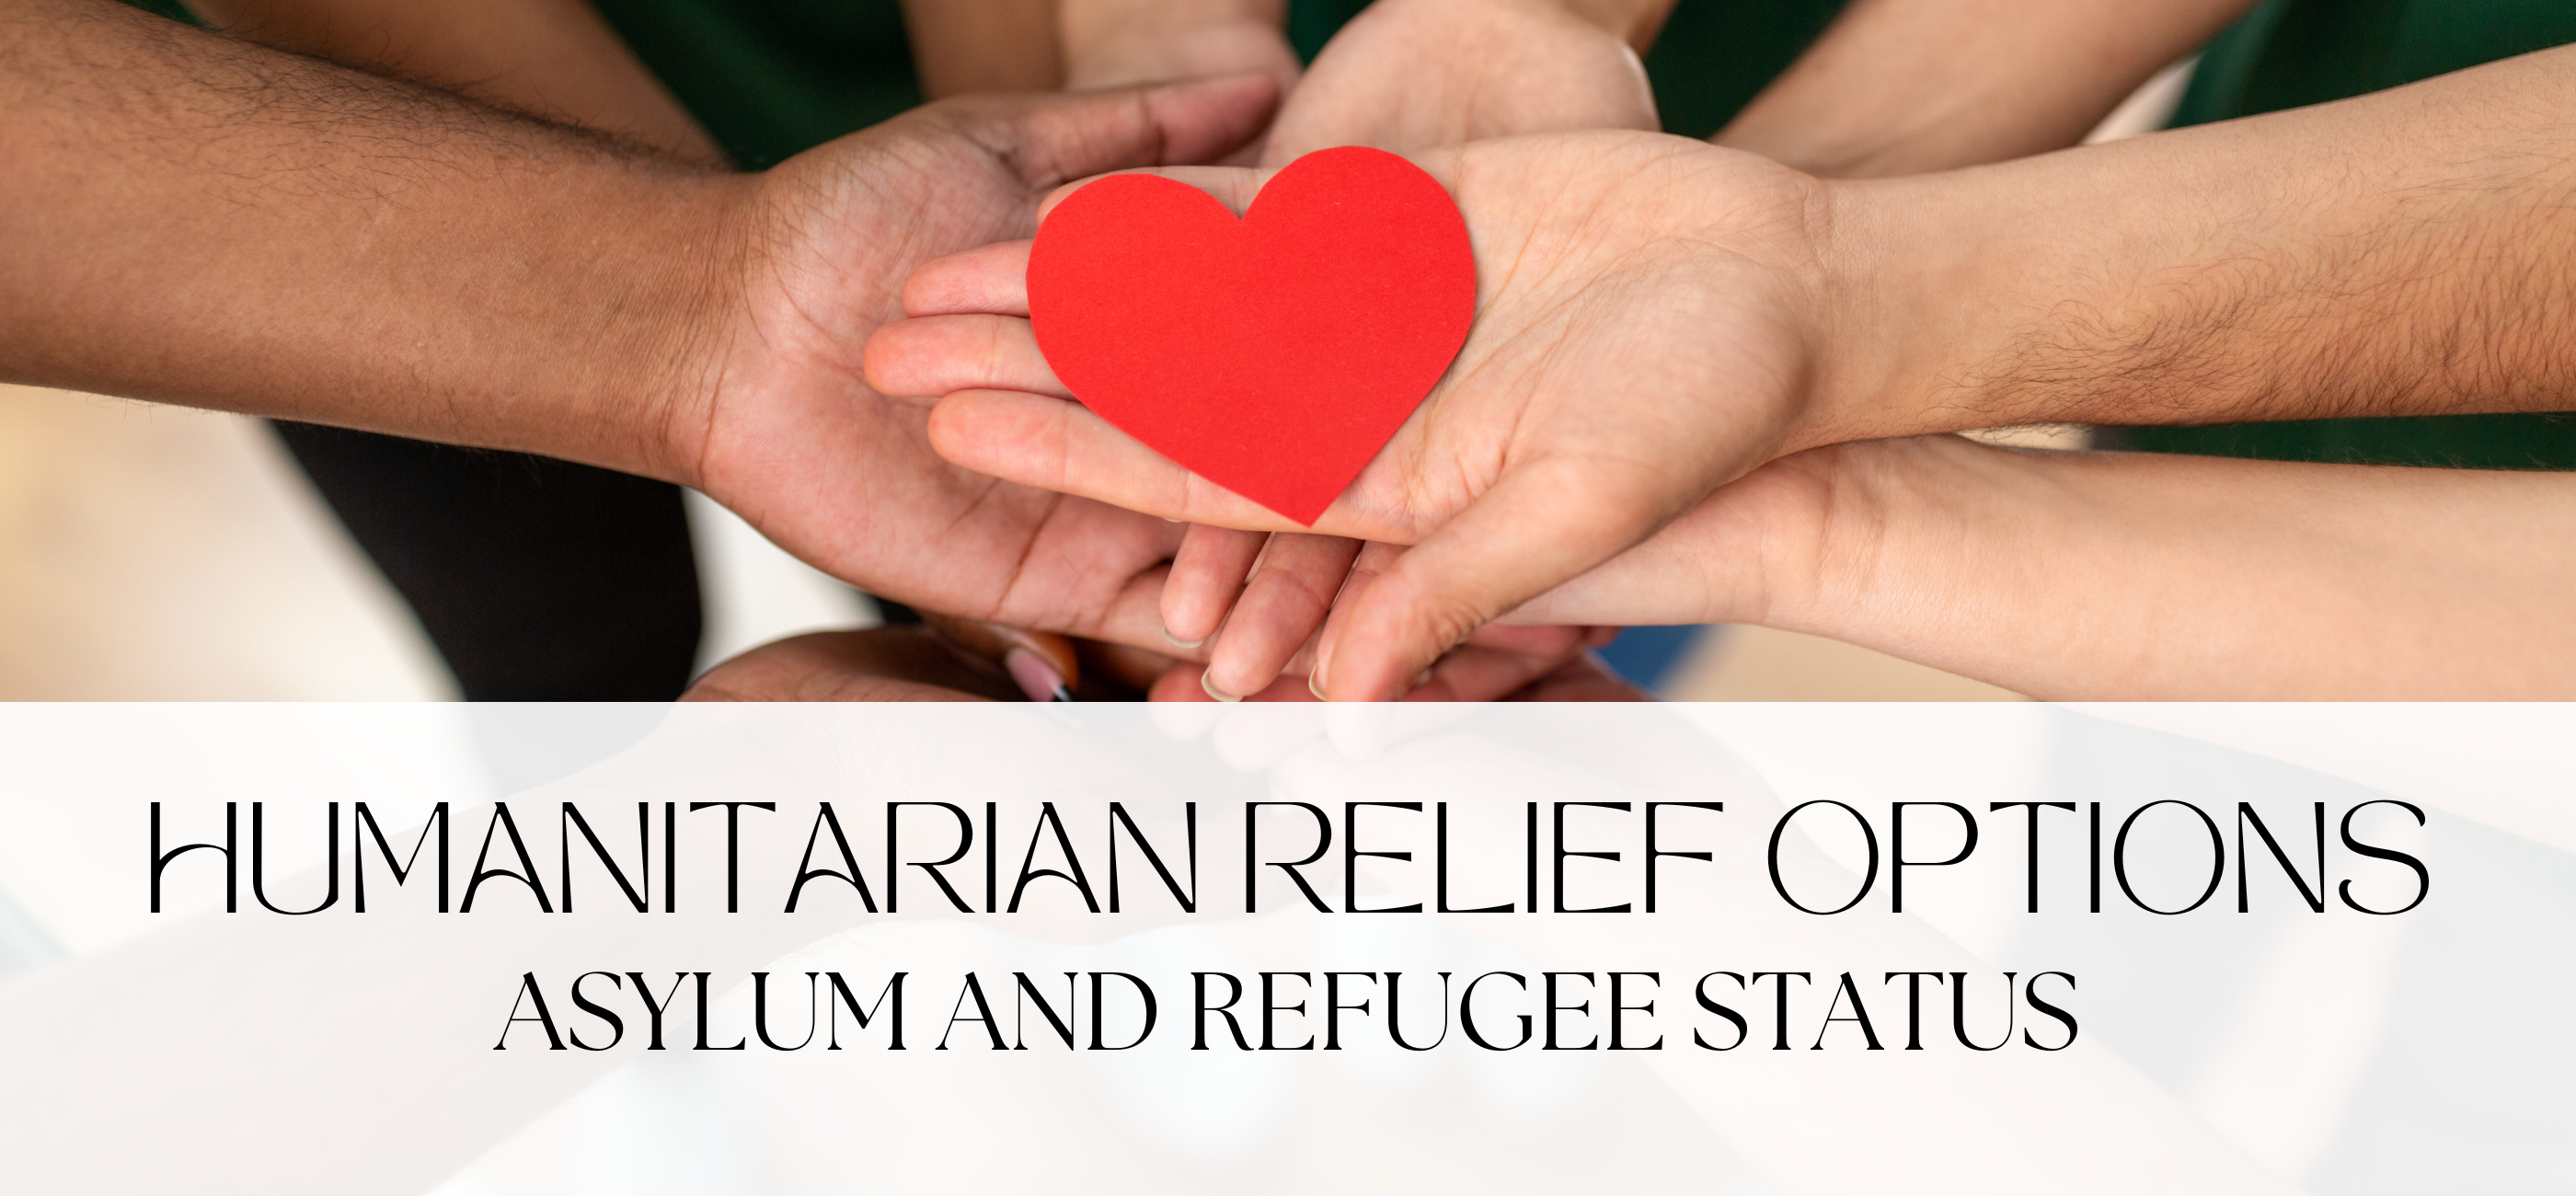 Humanitarian Relief Options: Asylum and Refugee Status